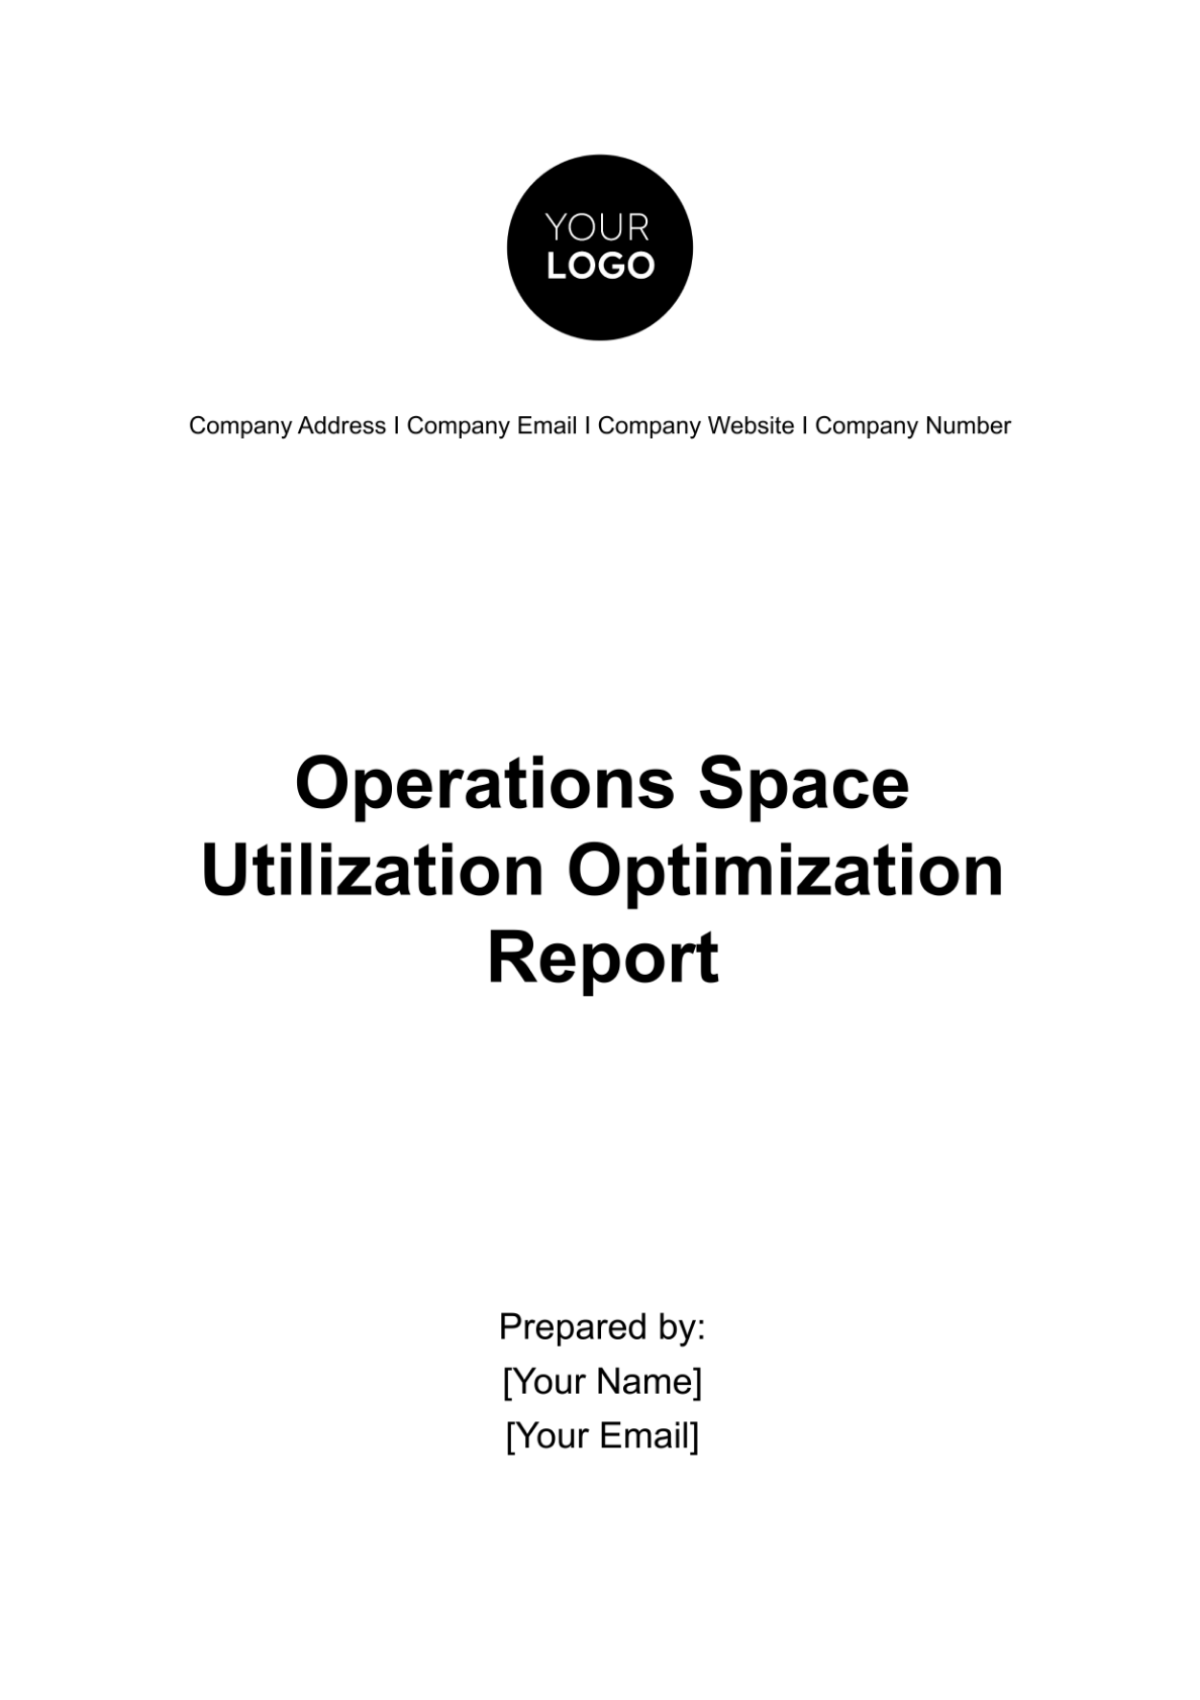 Operations Space Utilization Optimization Report Template